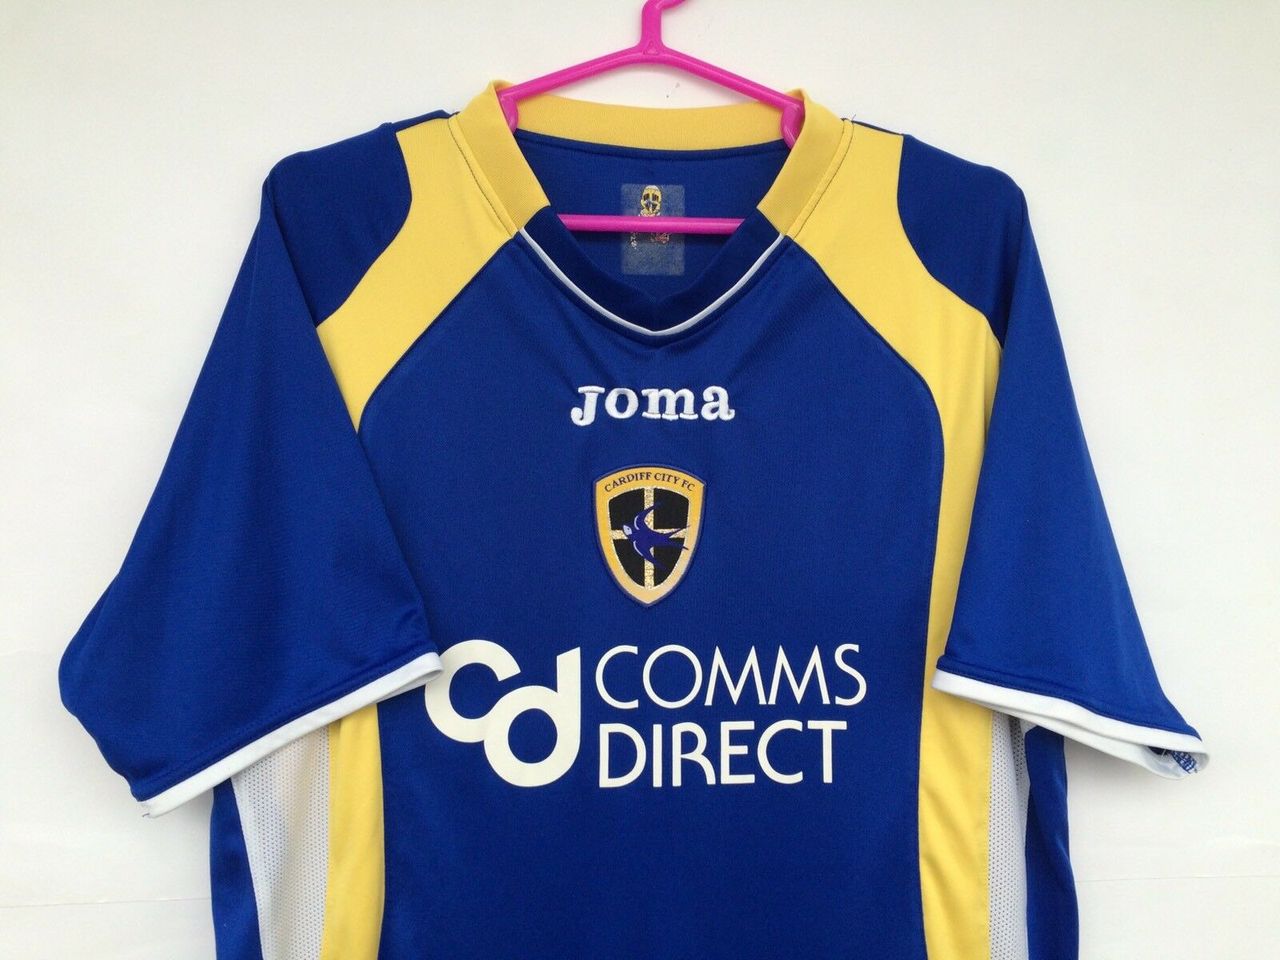 Cardiff City 2007/2008 Joma home football kit